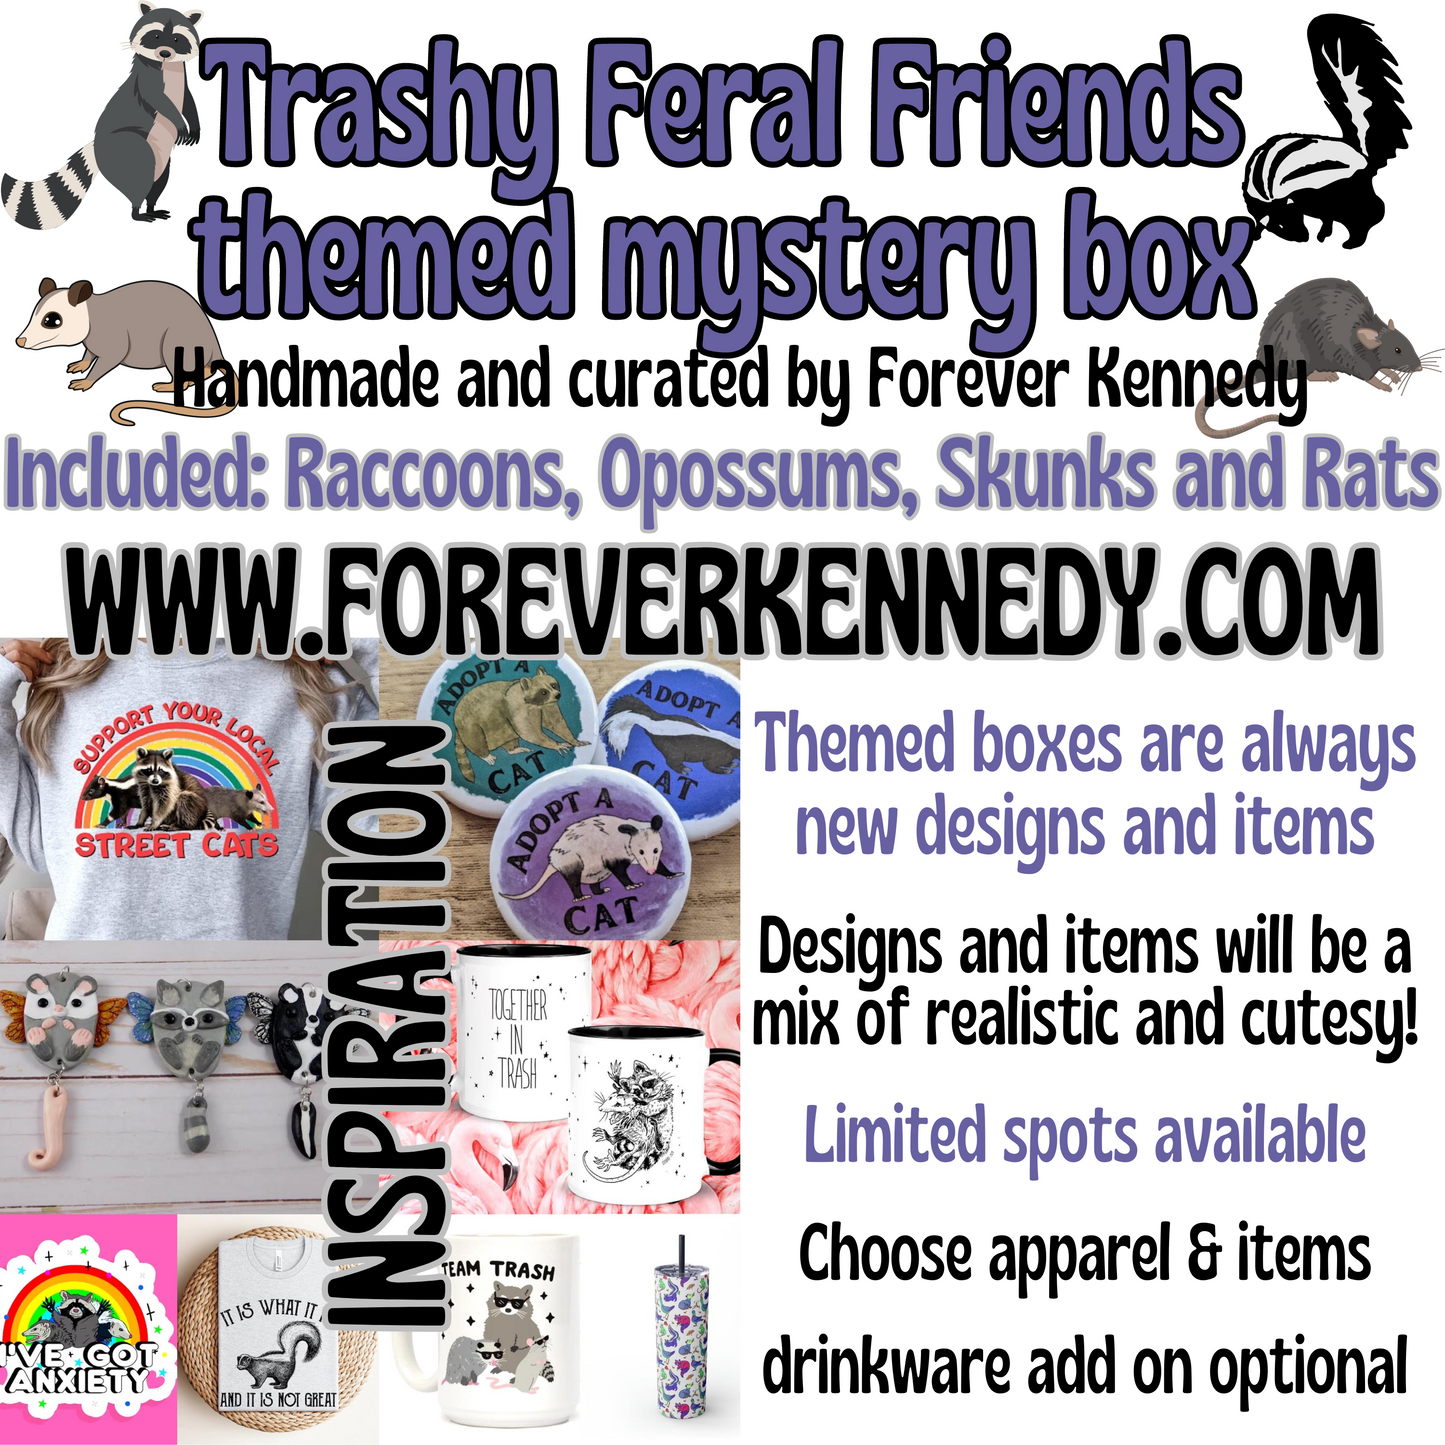 OPEN PRE-ORDER- Trashy Feral Friends Themed Mystery Box